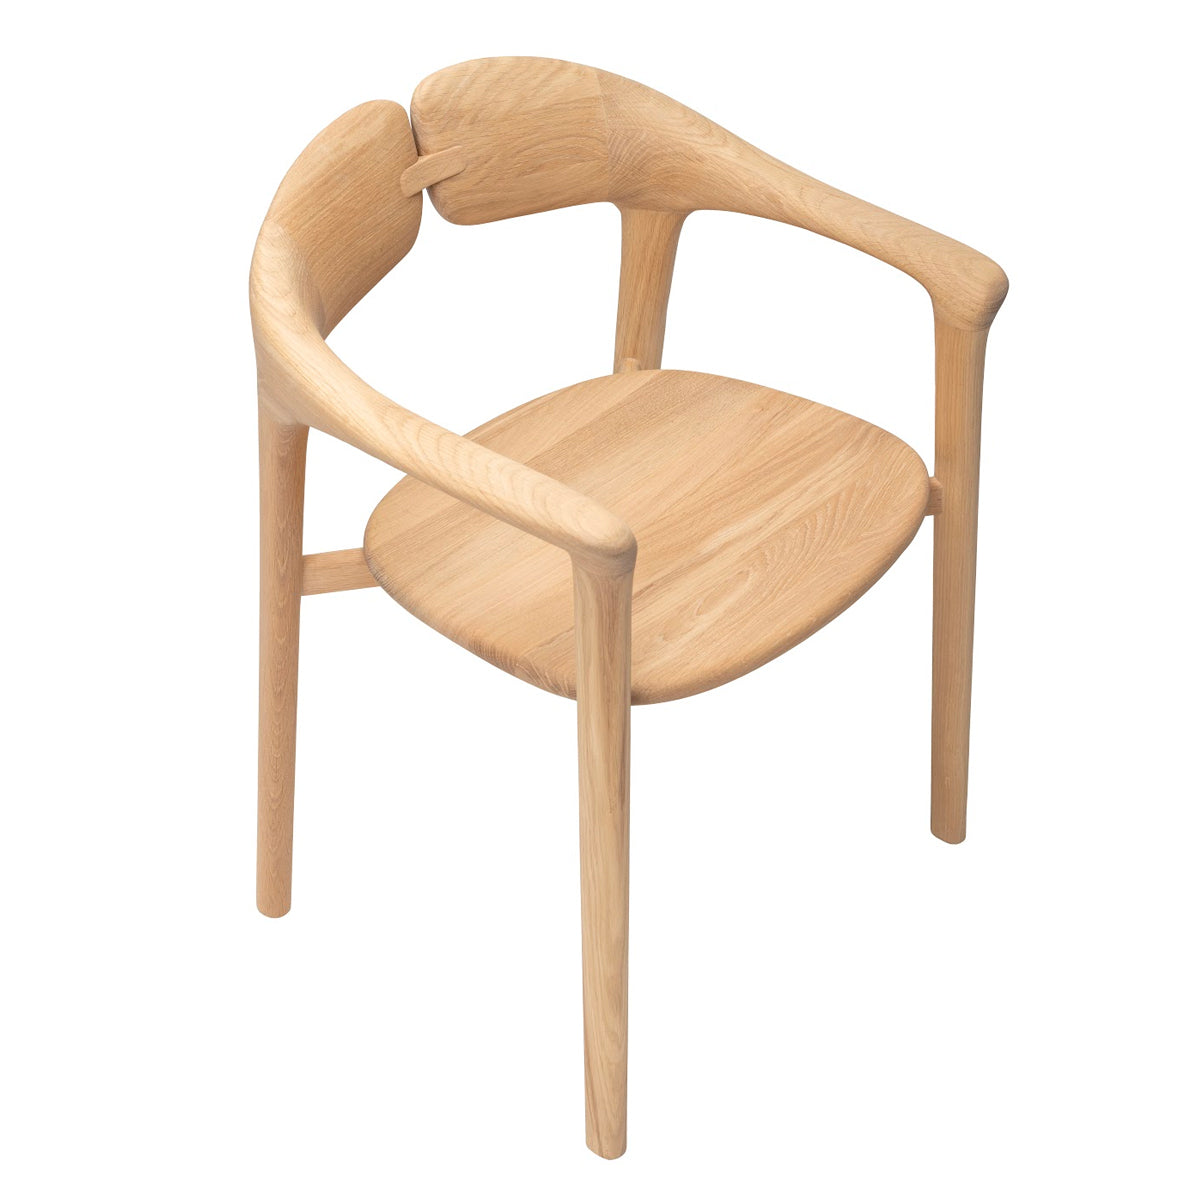 Lepida Chair by Woak | Do Shop